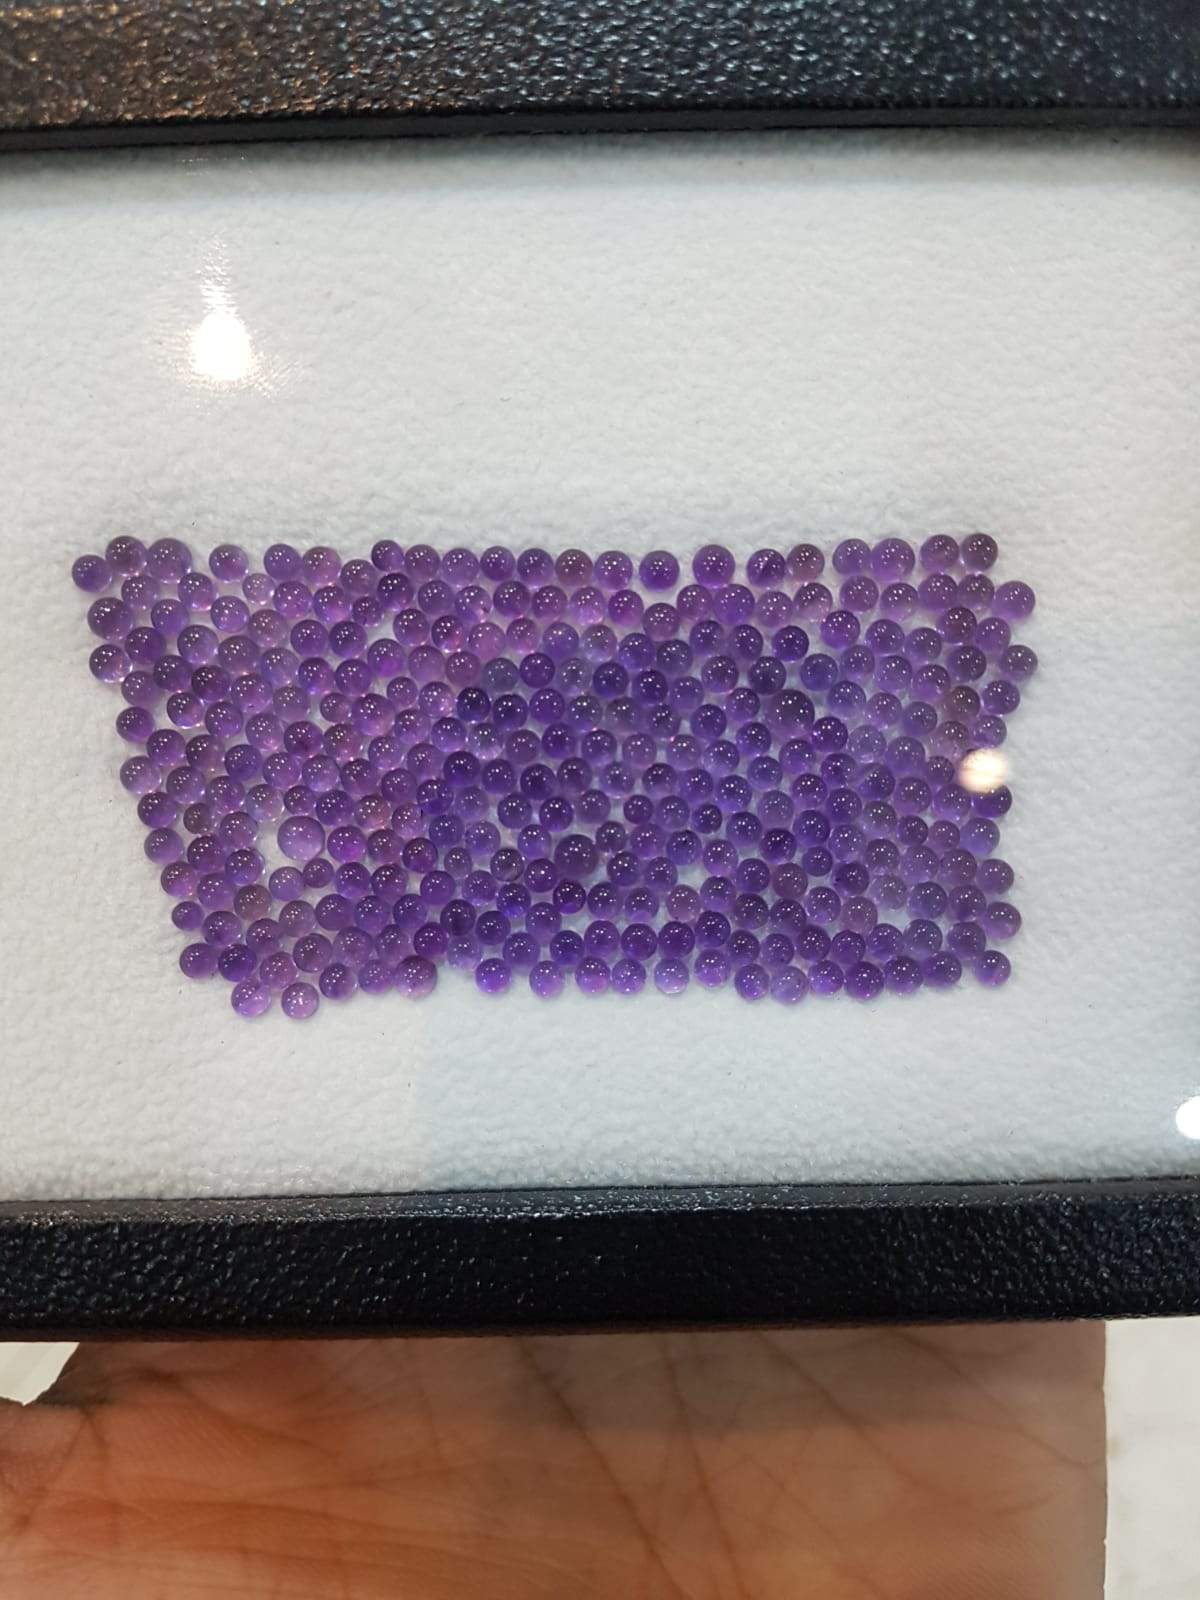 Amethyst Cabs 100pcs Lot of 2-3mm Natural Gemstones - The LabradoriteKing